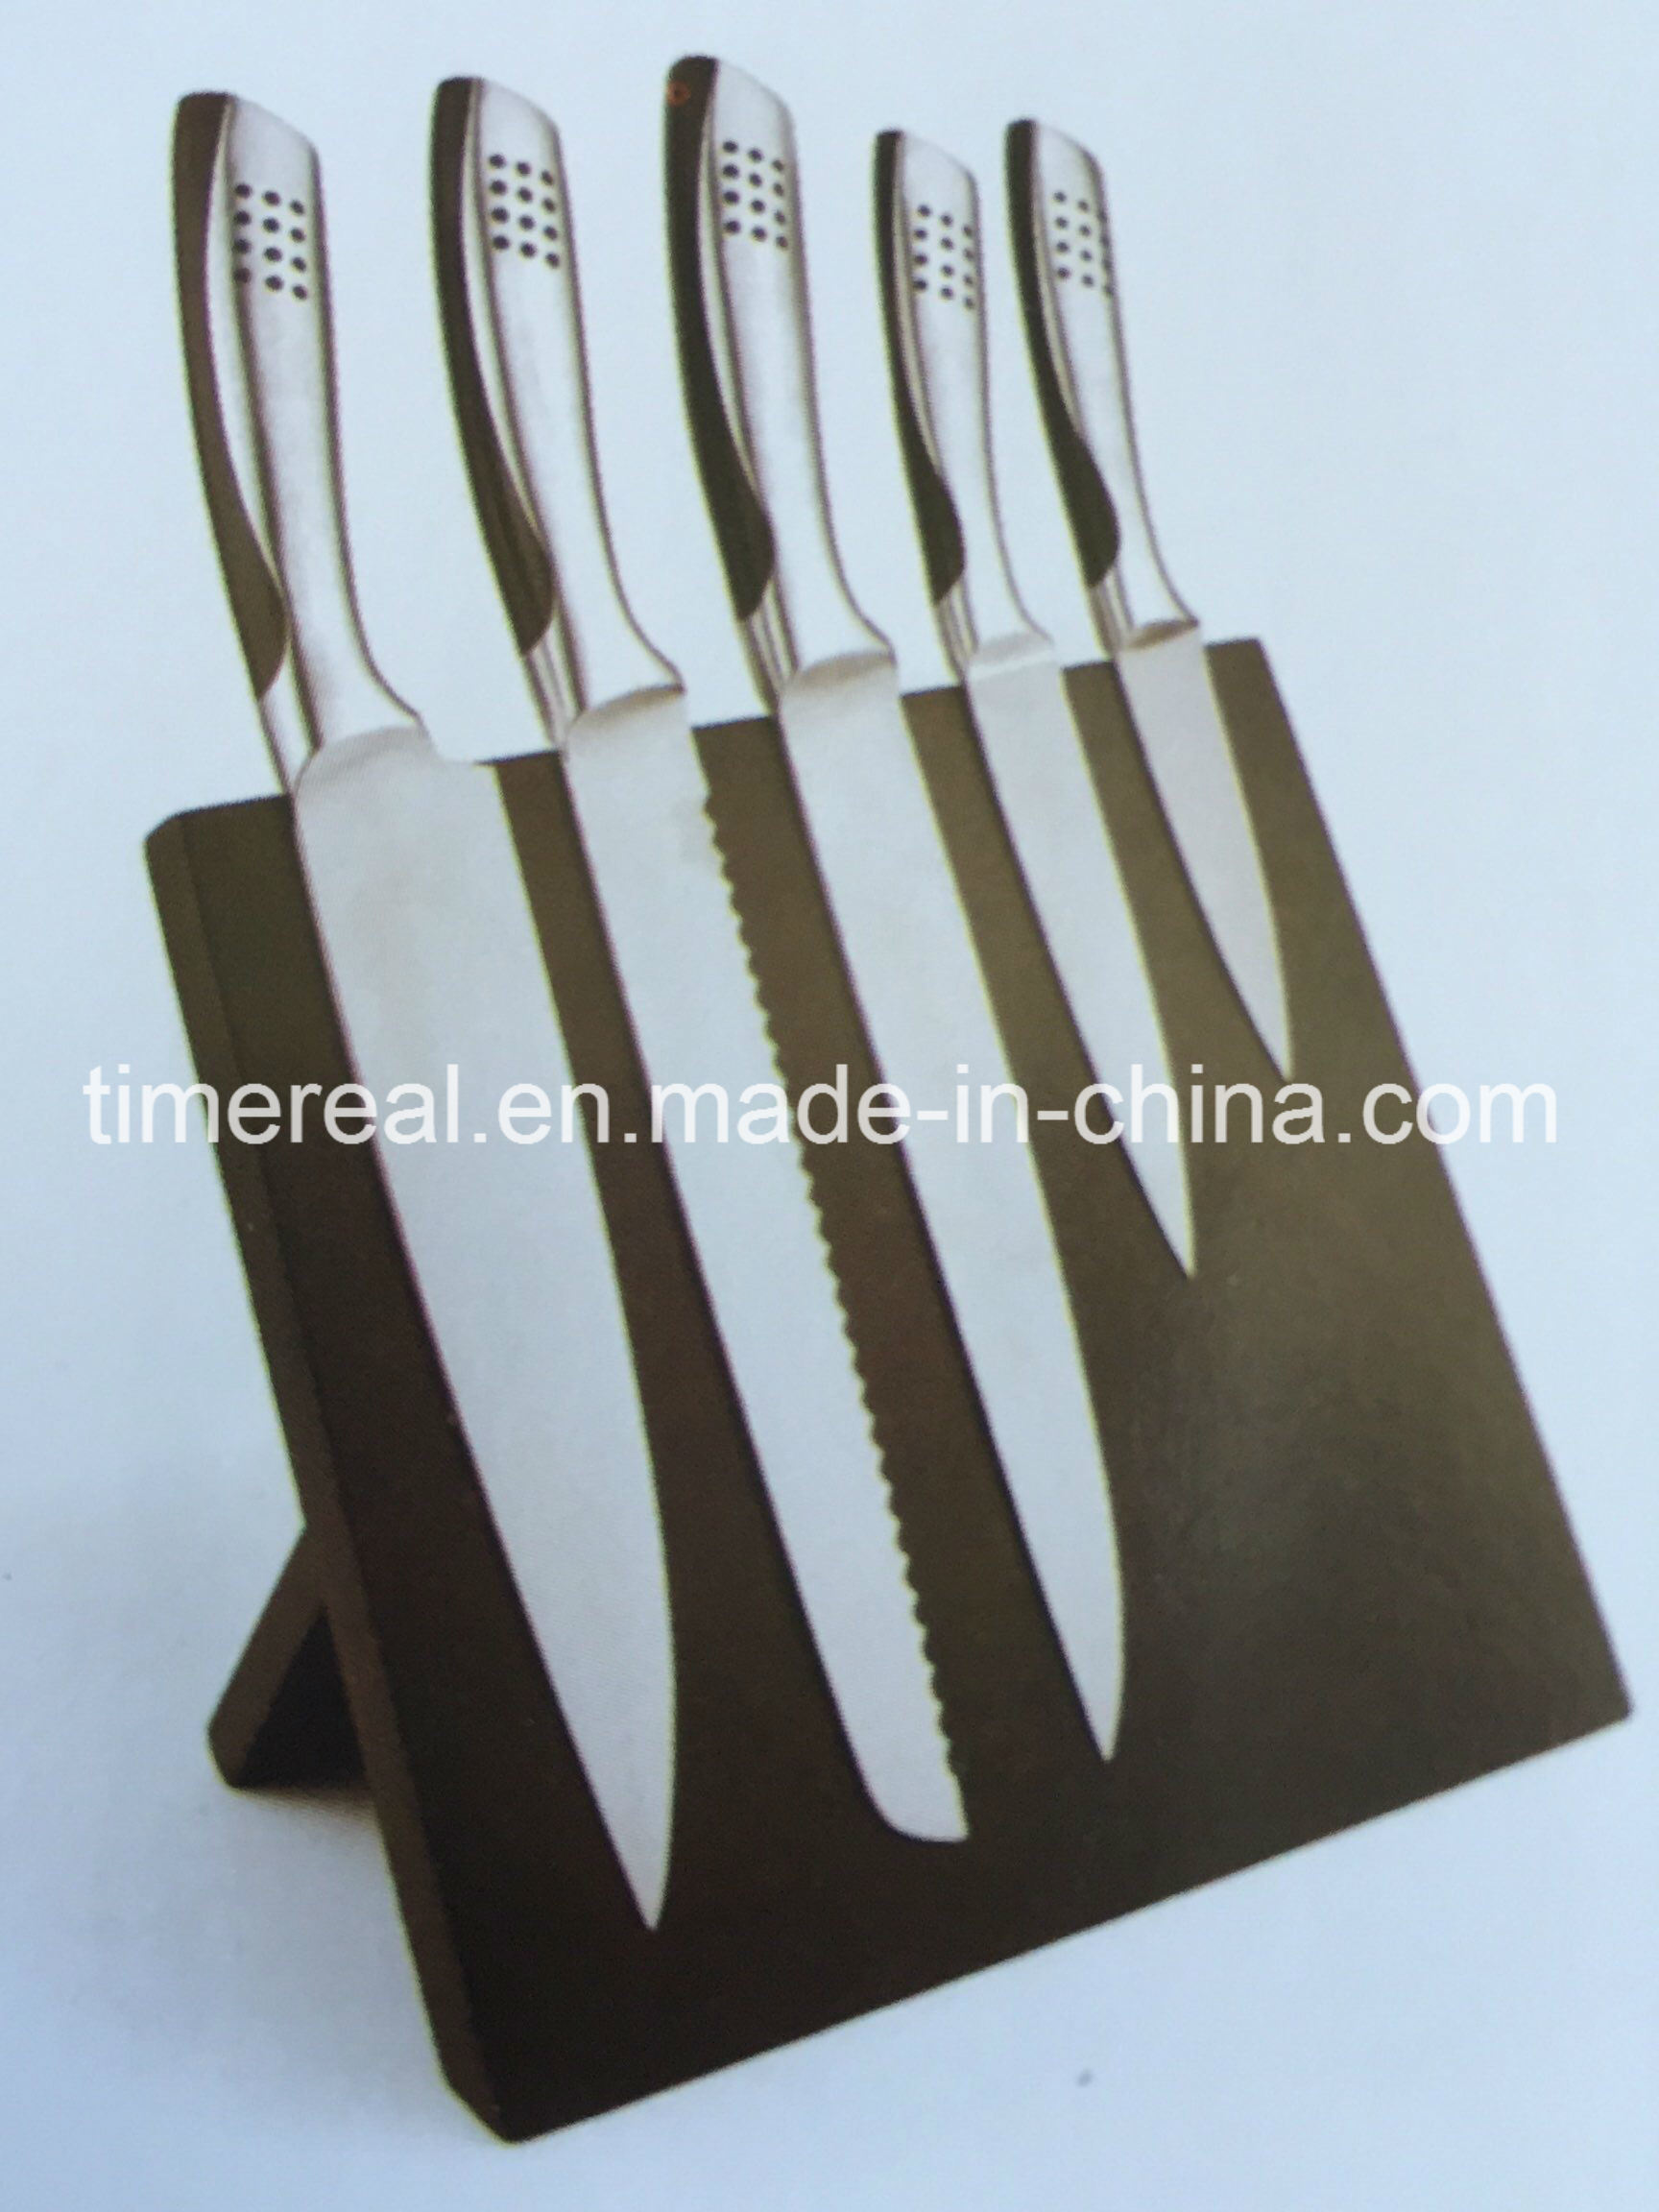 OEM/ODM Manufacturer Cookware Set -
 Stainless Steel Kitchen Knives Set with Painting No. Fj-0059 – Long Prosper